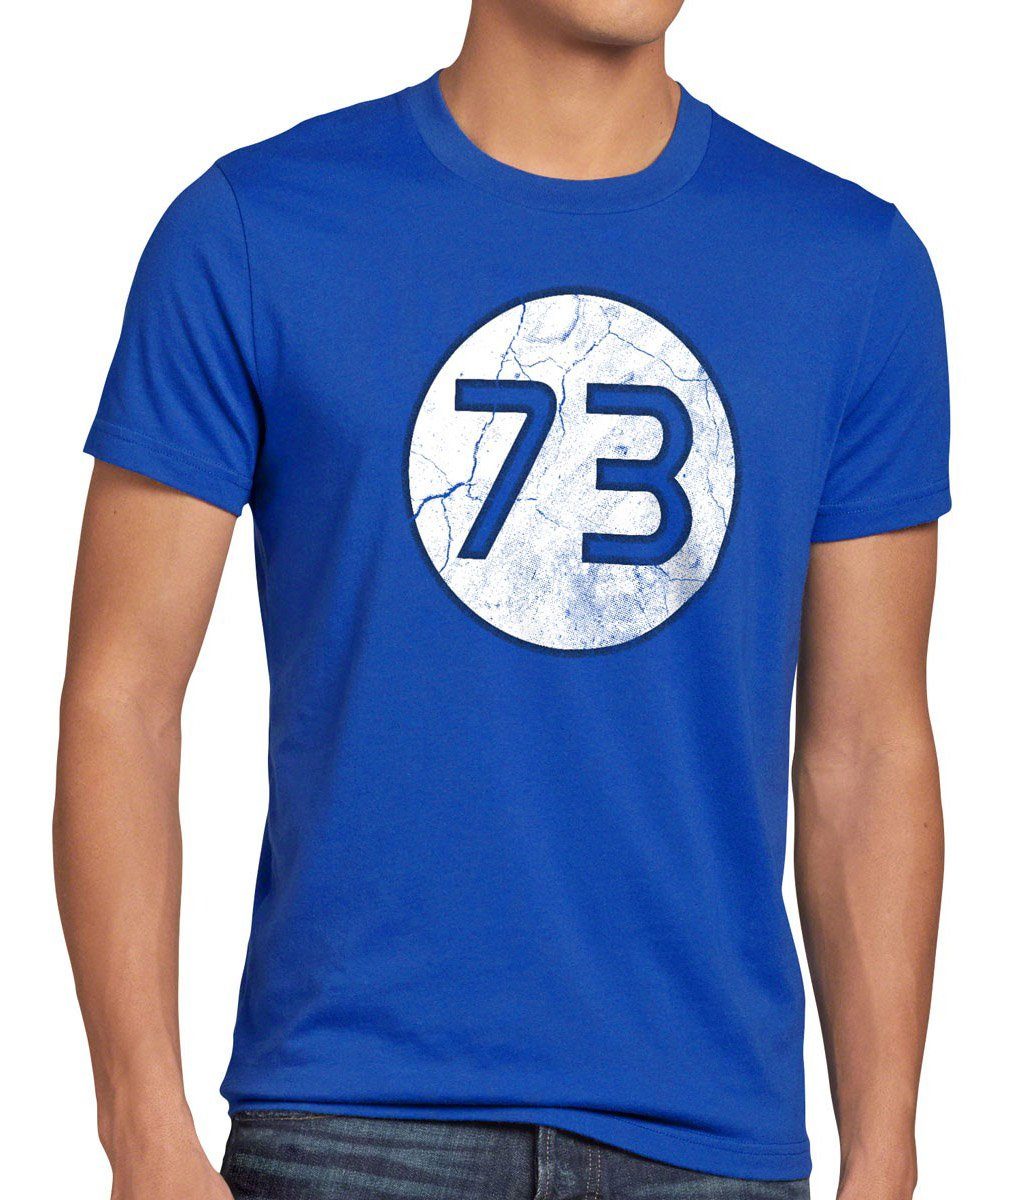 T-Shirt cooper Sheldon big theory tbbt blau style3 Print-Shirt bang 73 leonard zahl Herren Lieblingszahl